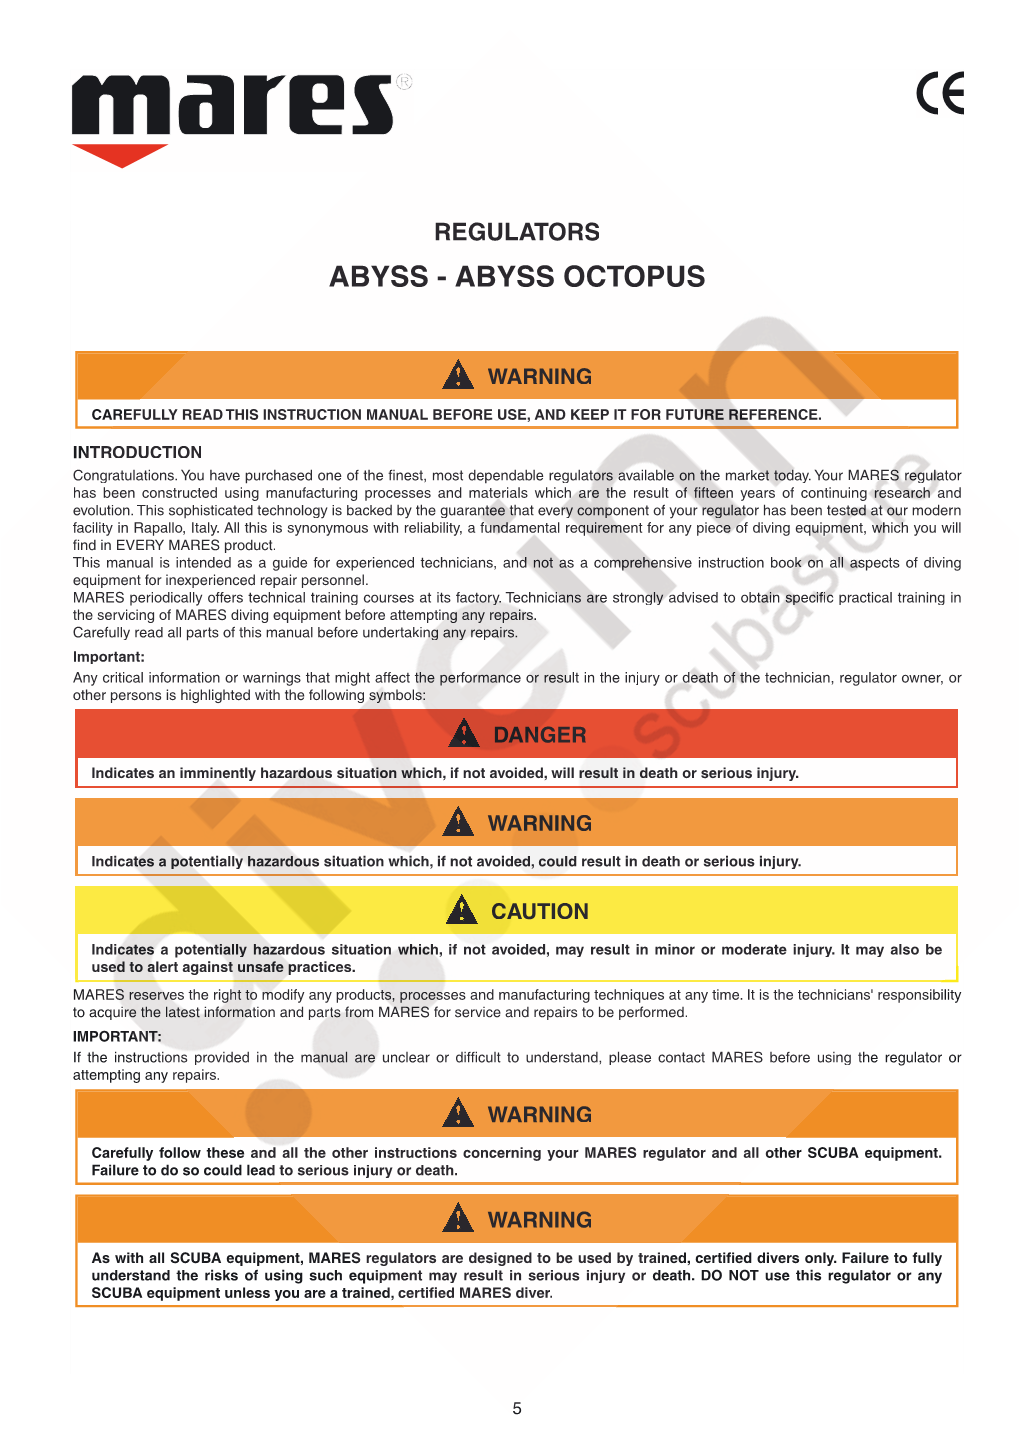 Abyssabyss - Abyabyssss Ococtopustopus